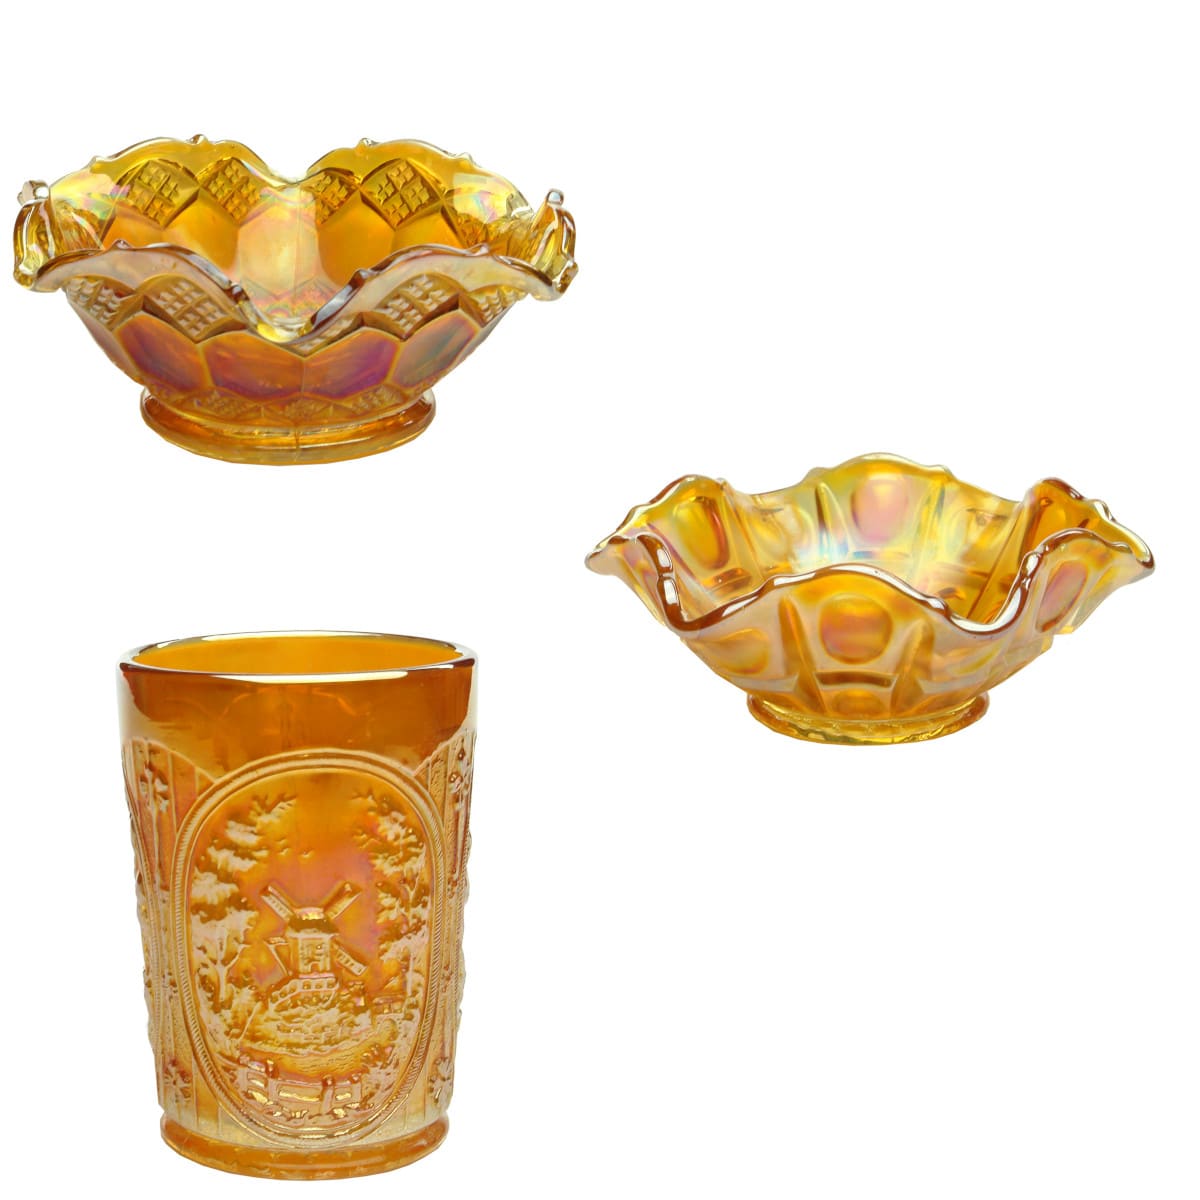 3 Carnival Glass Items: Marigold bowl; Marigold Ruffled bowl; Imperial Windmill Glass.